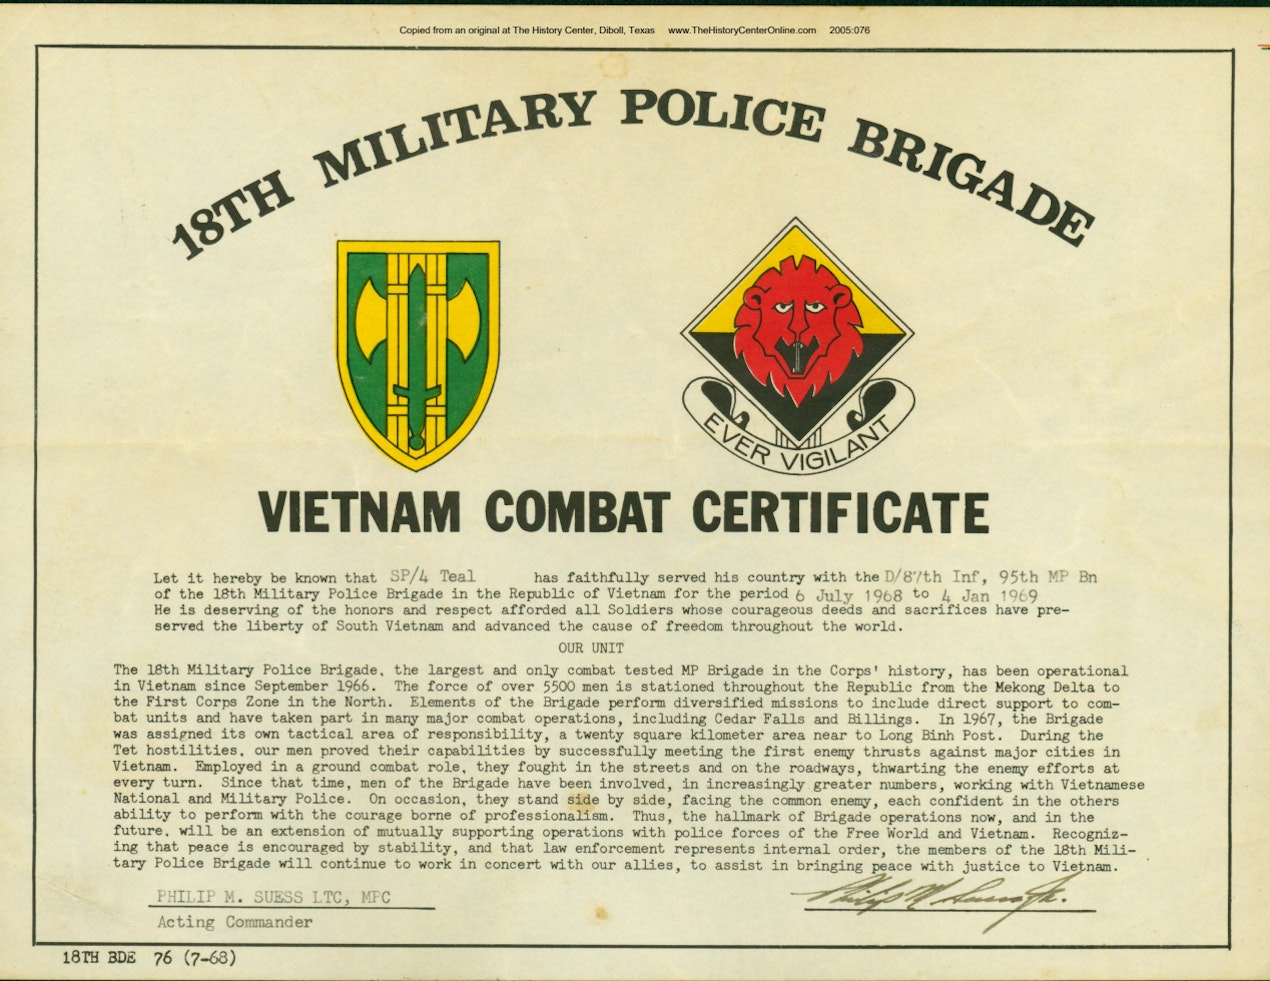 004_Leonard_Teal_Combat_Certificate